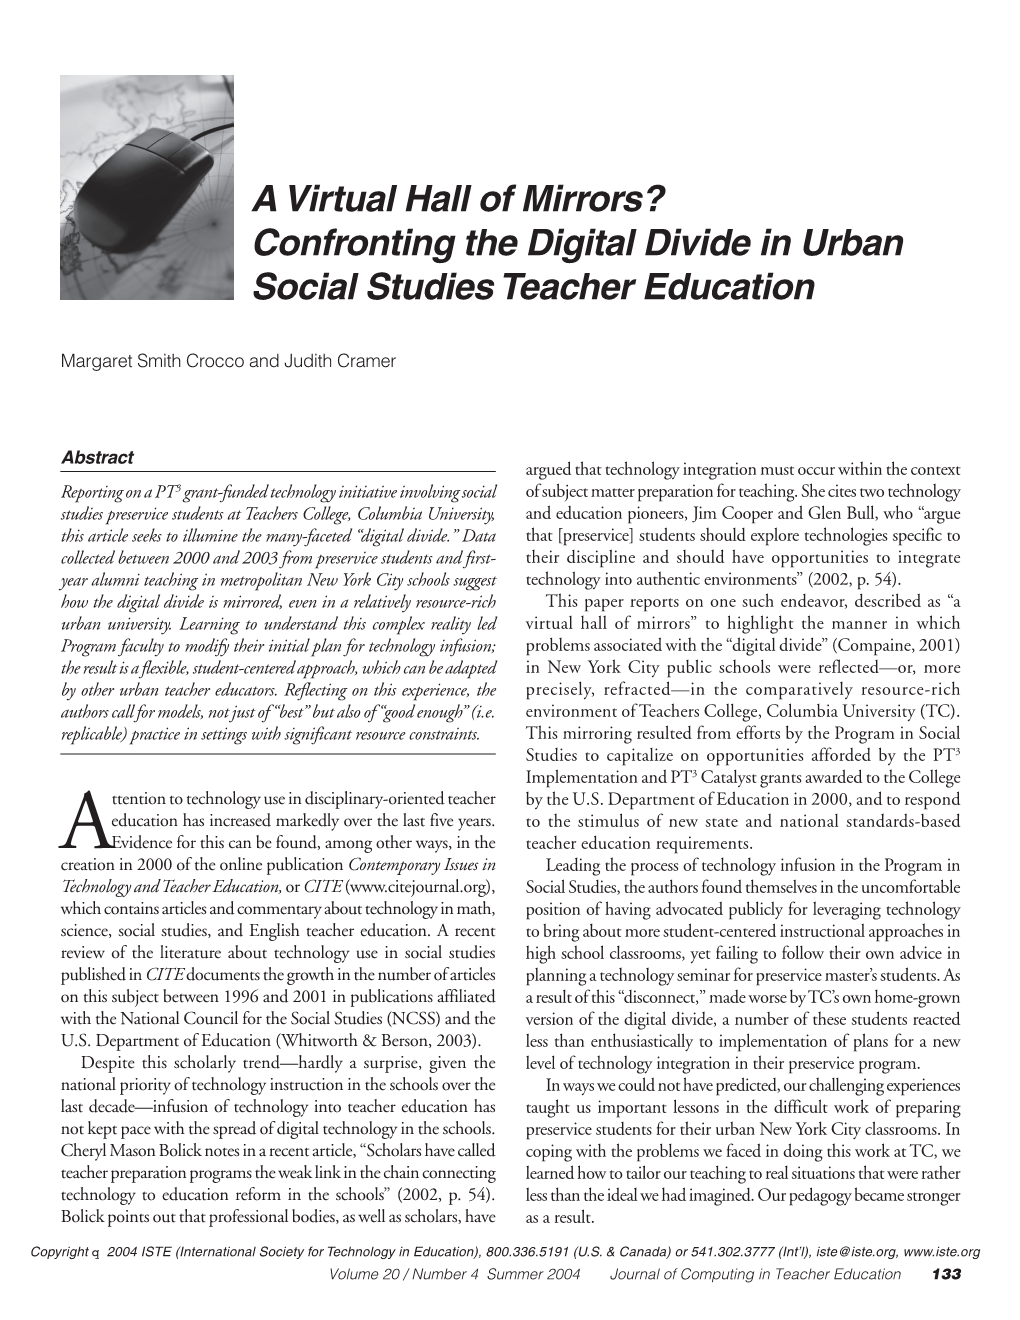 Confronting the Digital Divide in Urban Social Studies Teacher Education